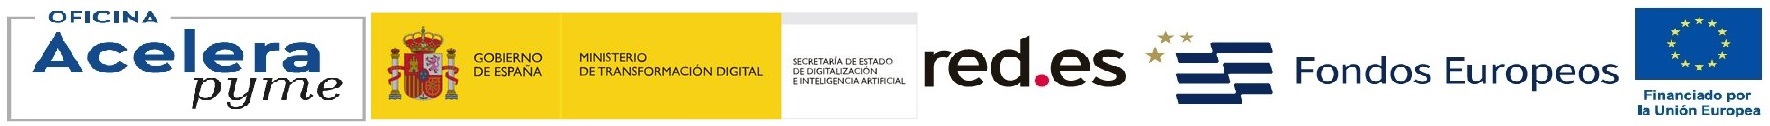 Web oficinas Acelera Pyme Andalucía